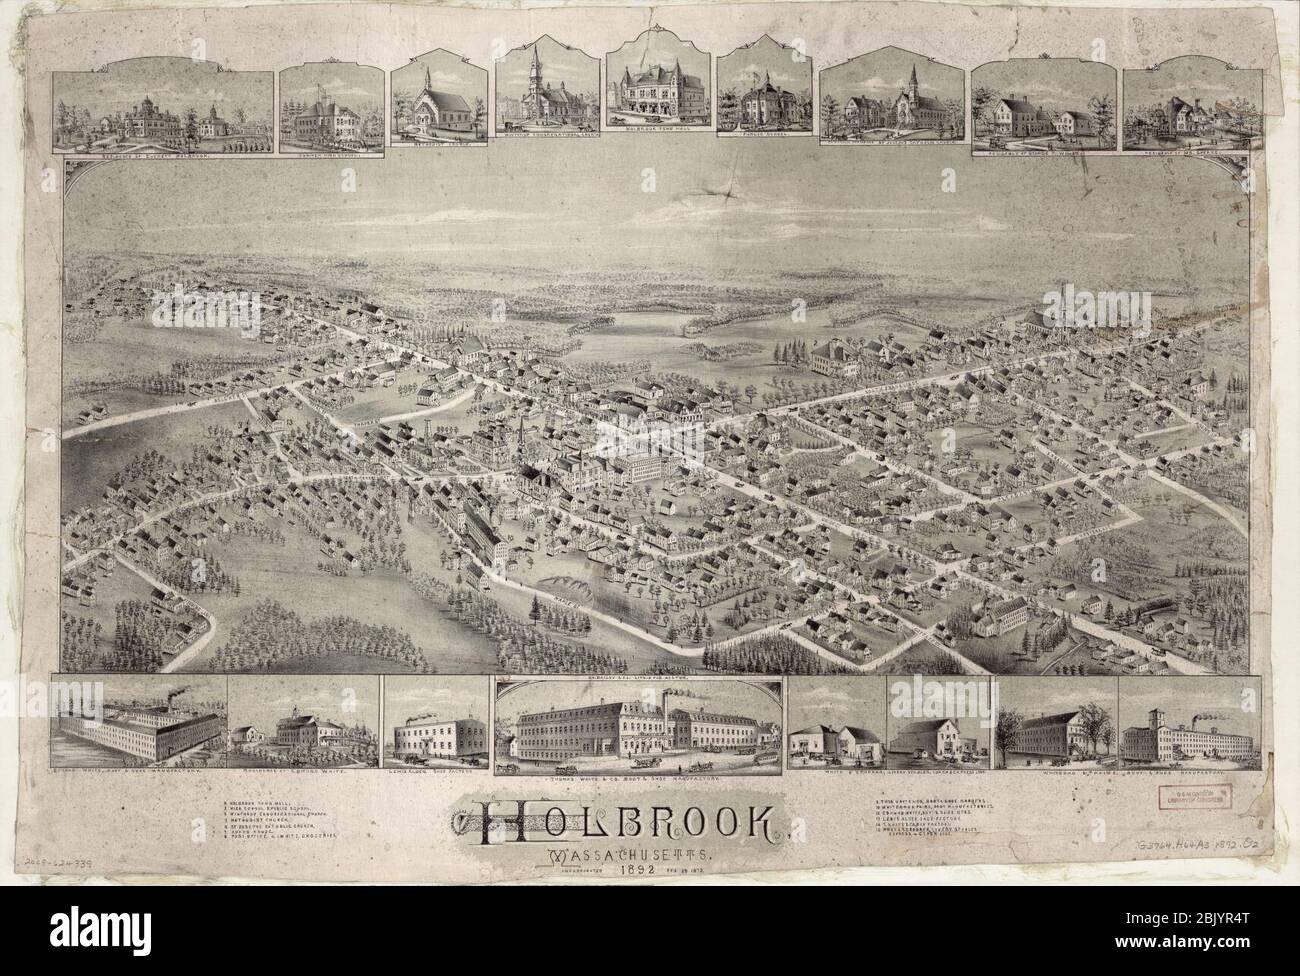 Holbrook, Massachusetts, 1892 - incorporated Feb. 29, 1872. Stock Photo